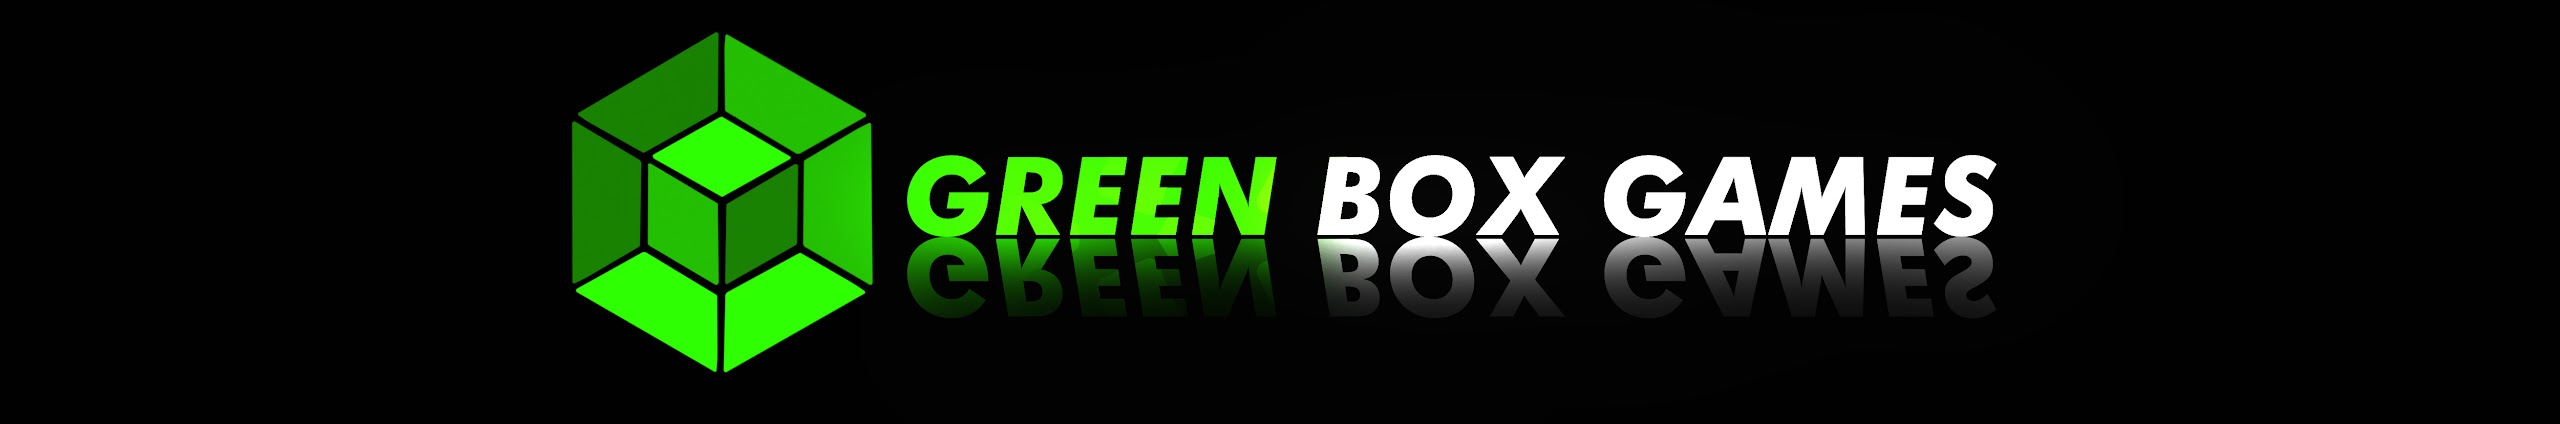 Green Box Games